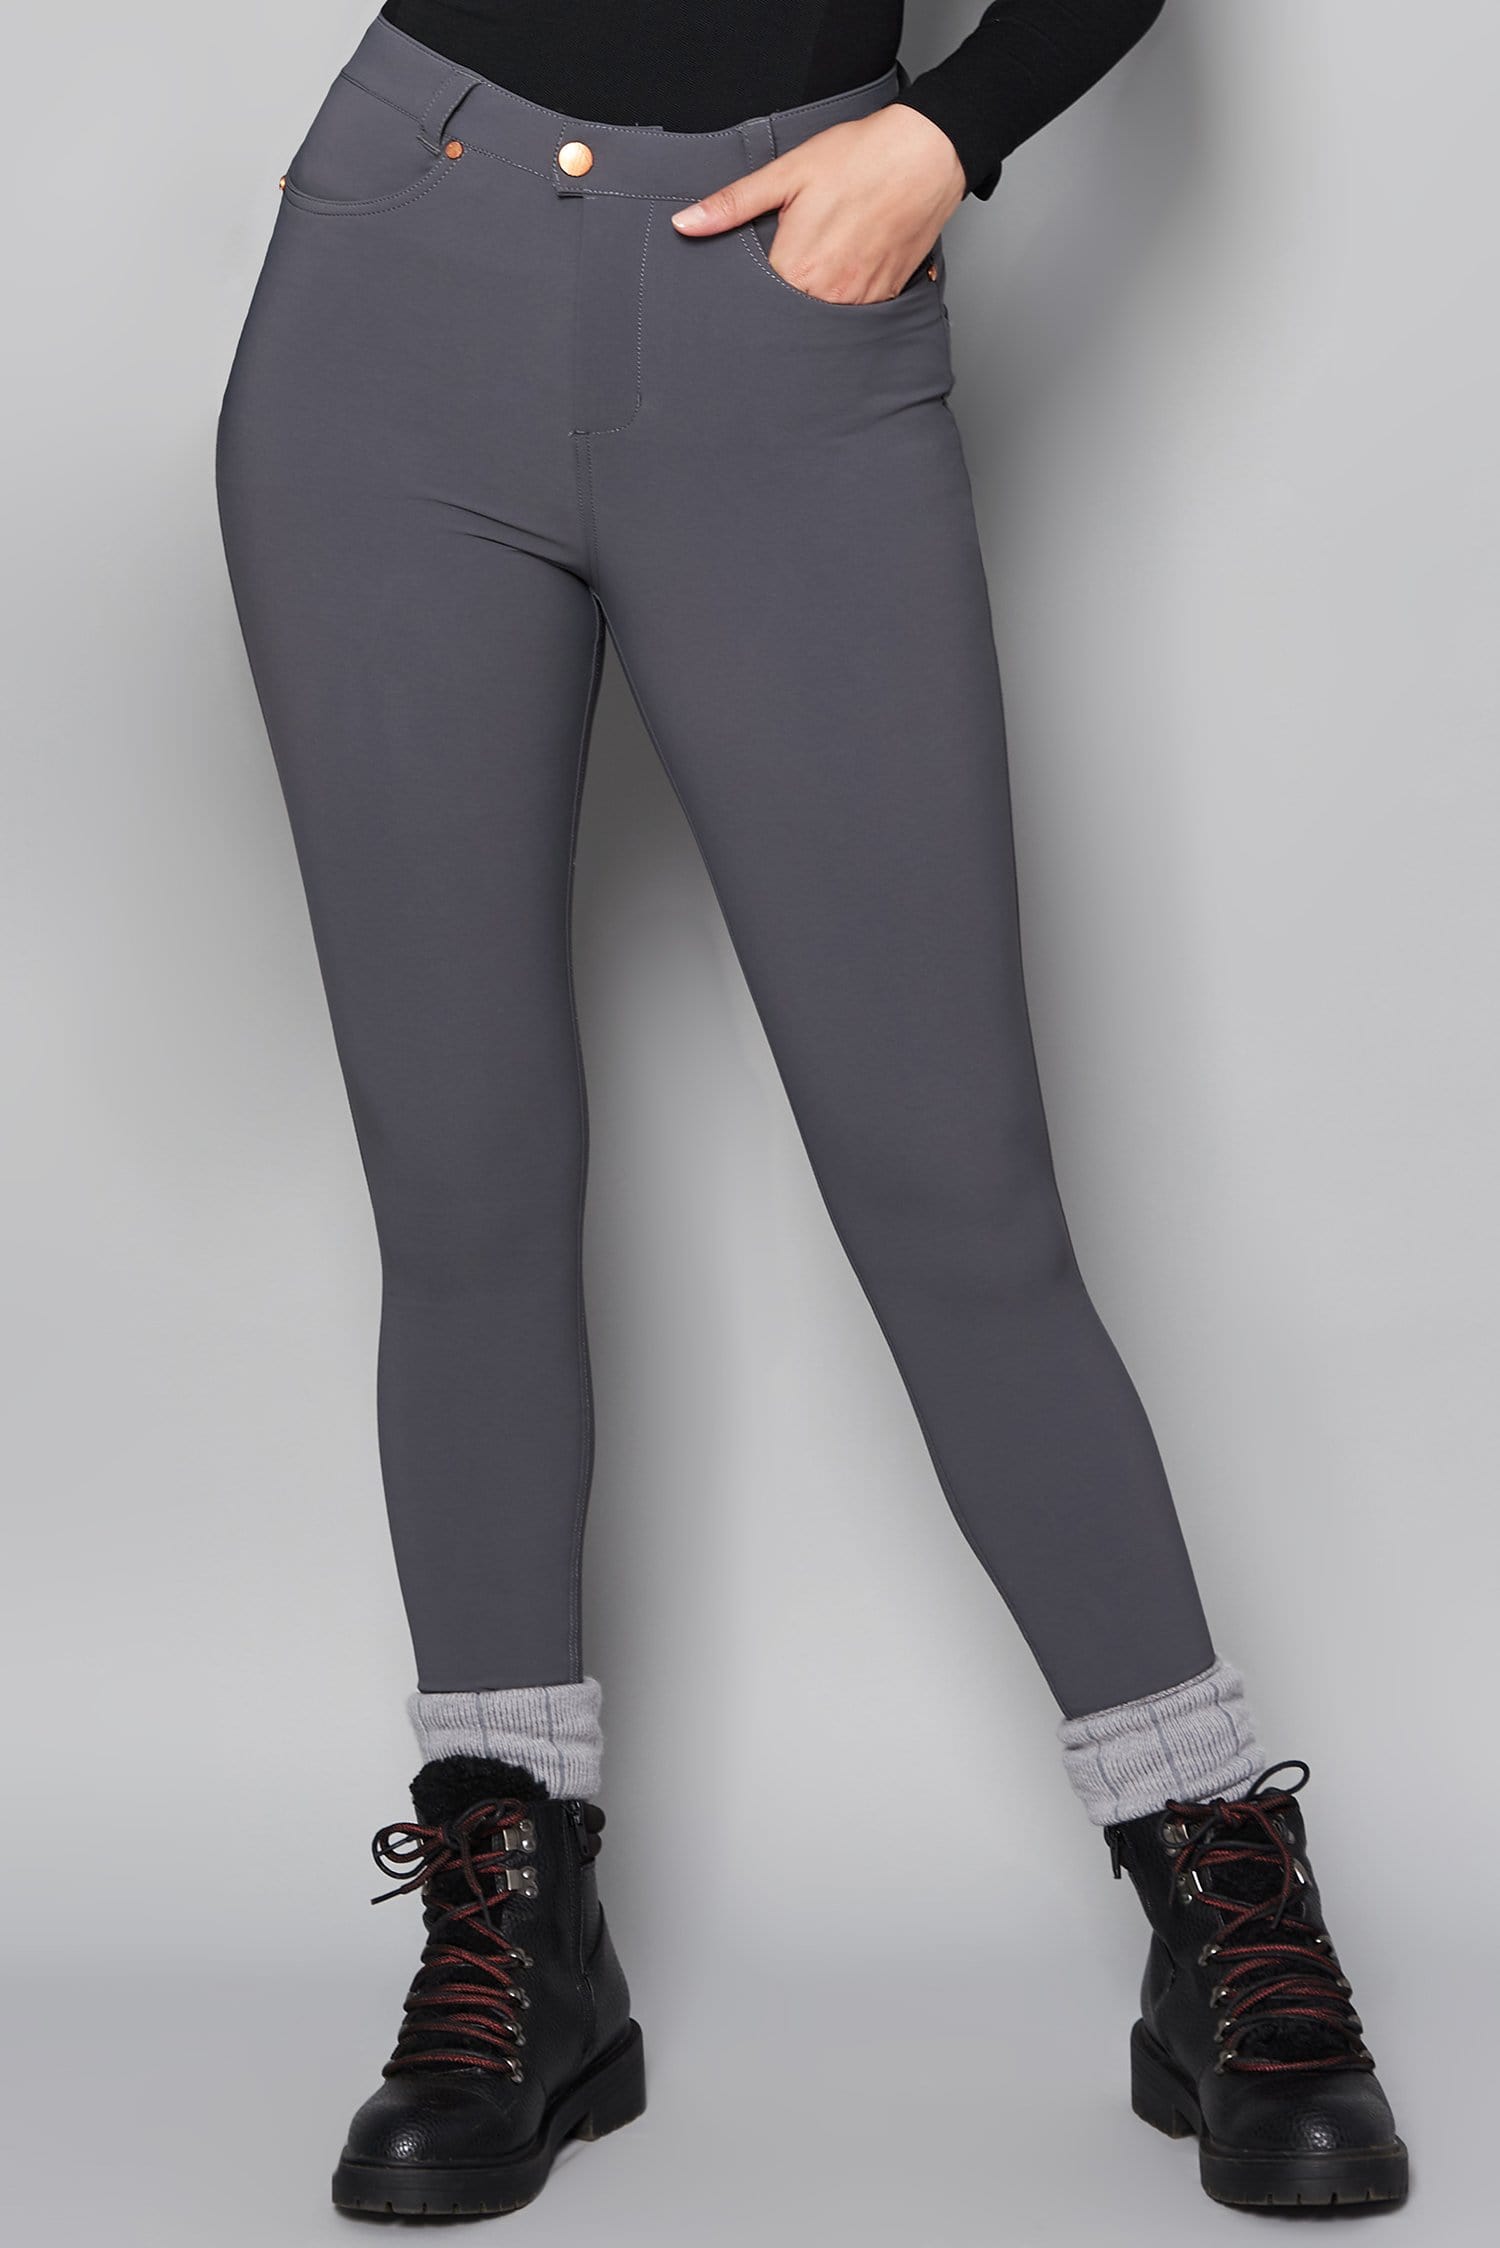 CHALODIA Slim Fit Women Grey Trousers - Buy CHALODIA Slim Fit Women Grey  Trousers Online at Best Prices in India | Flipkart.com